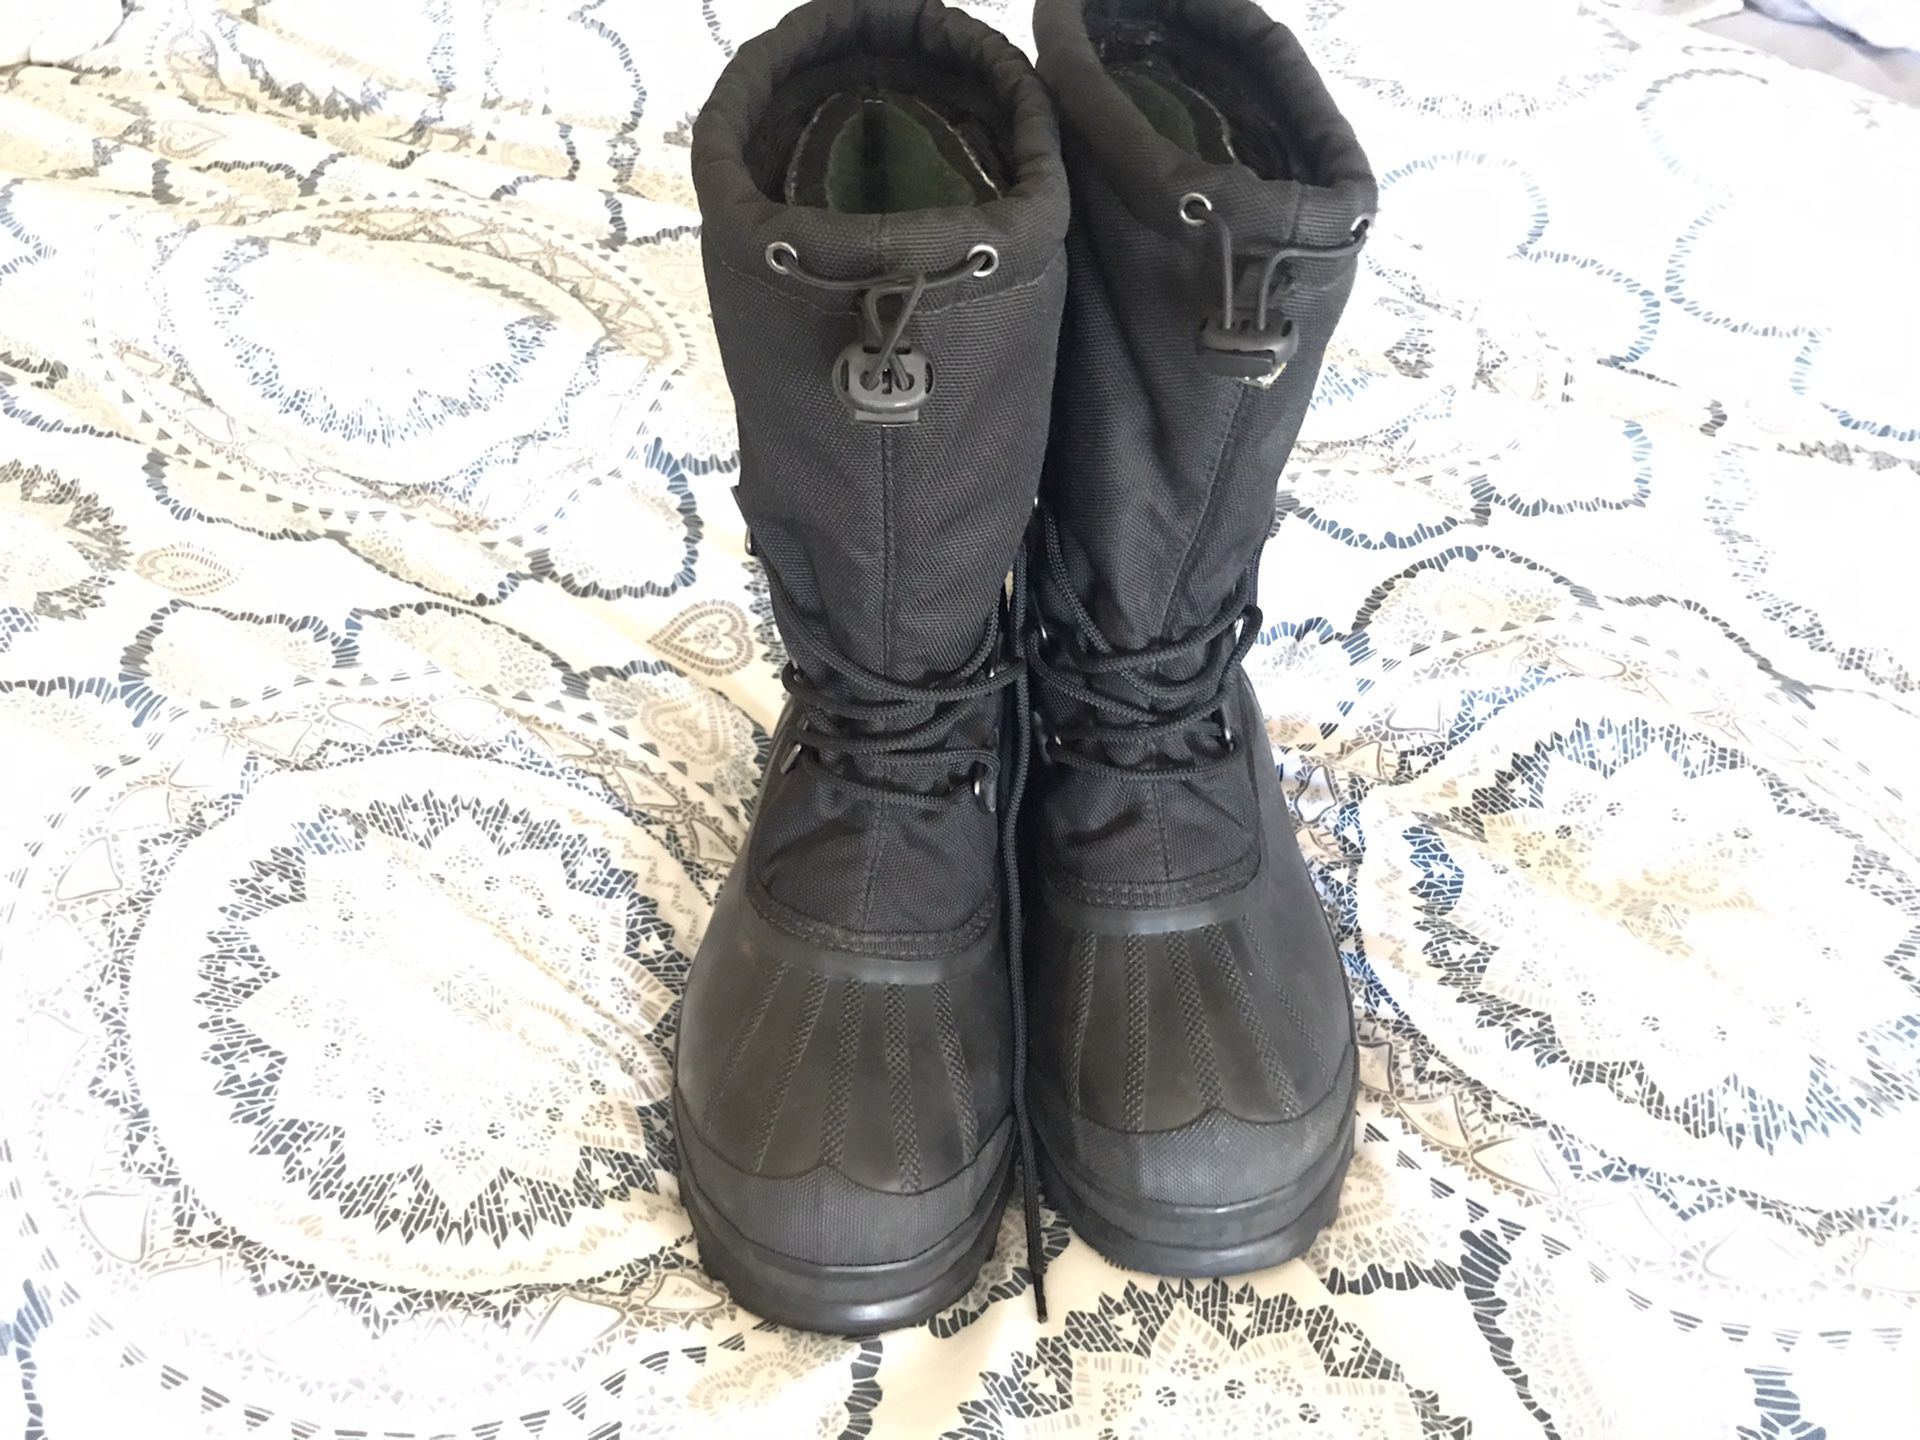 Sorel NY1582-010 insulated winter snow boots men’s/boys size 6,women size 8-8 black